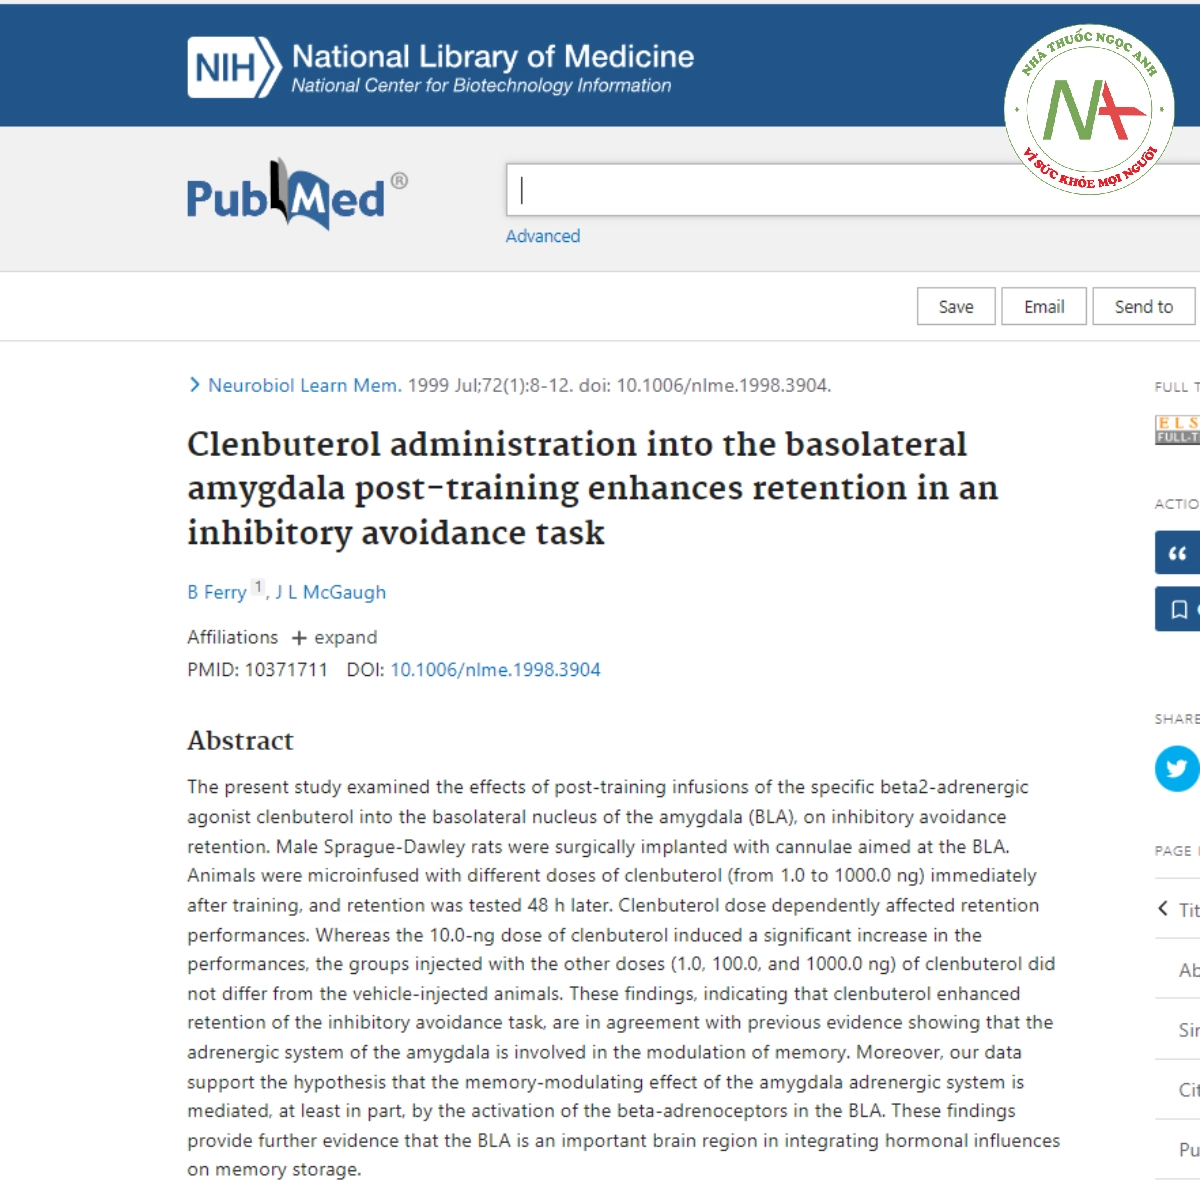 Clenbuterol administration into the basolateral amygdala post-training enhances retention in an inhibitory avoidance task